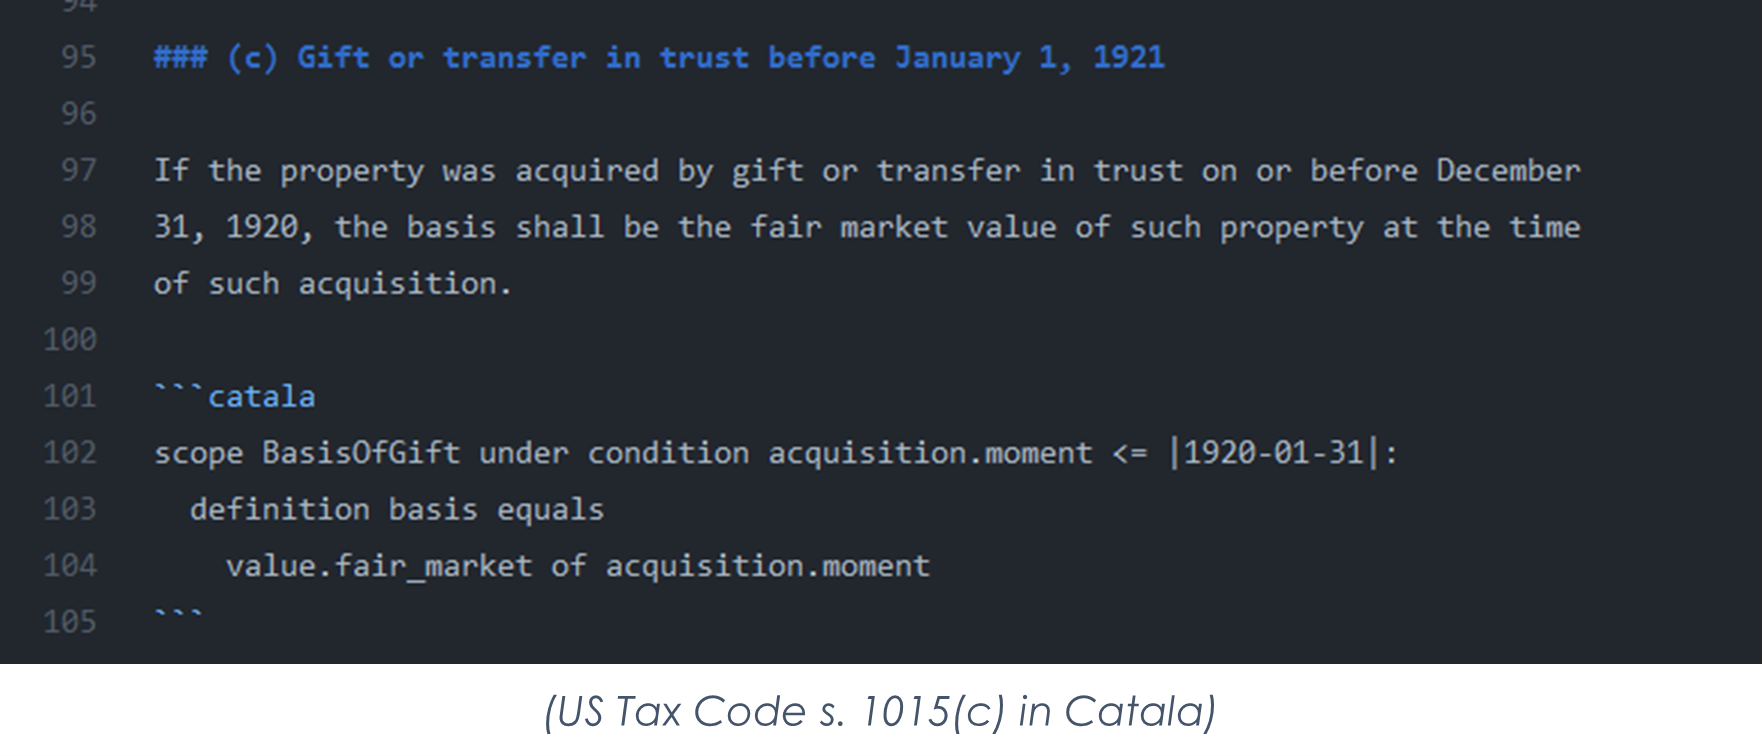 US Tax Code §1015(c) in Catala